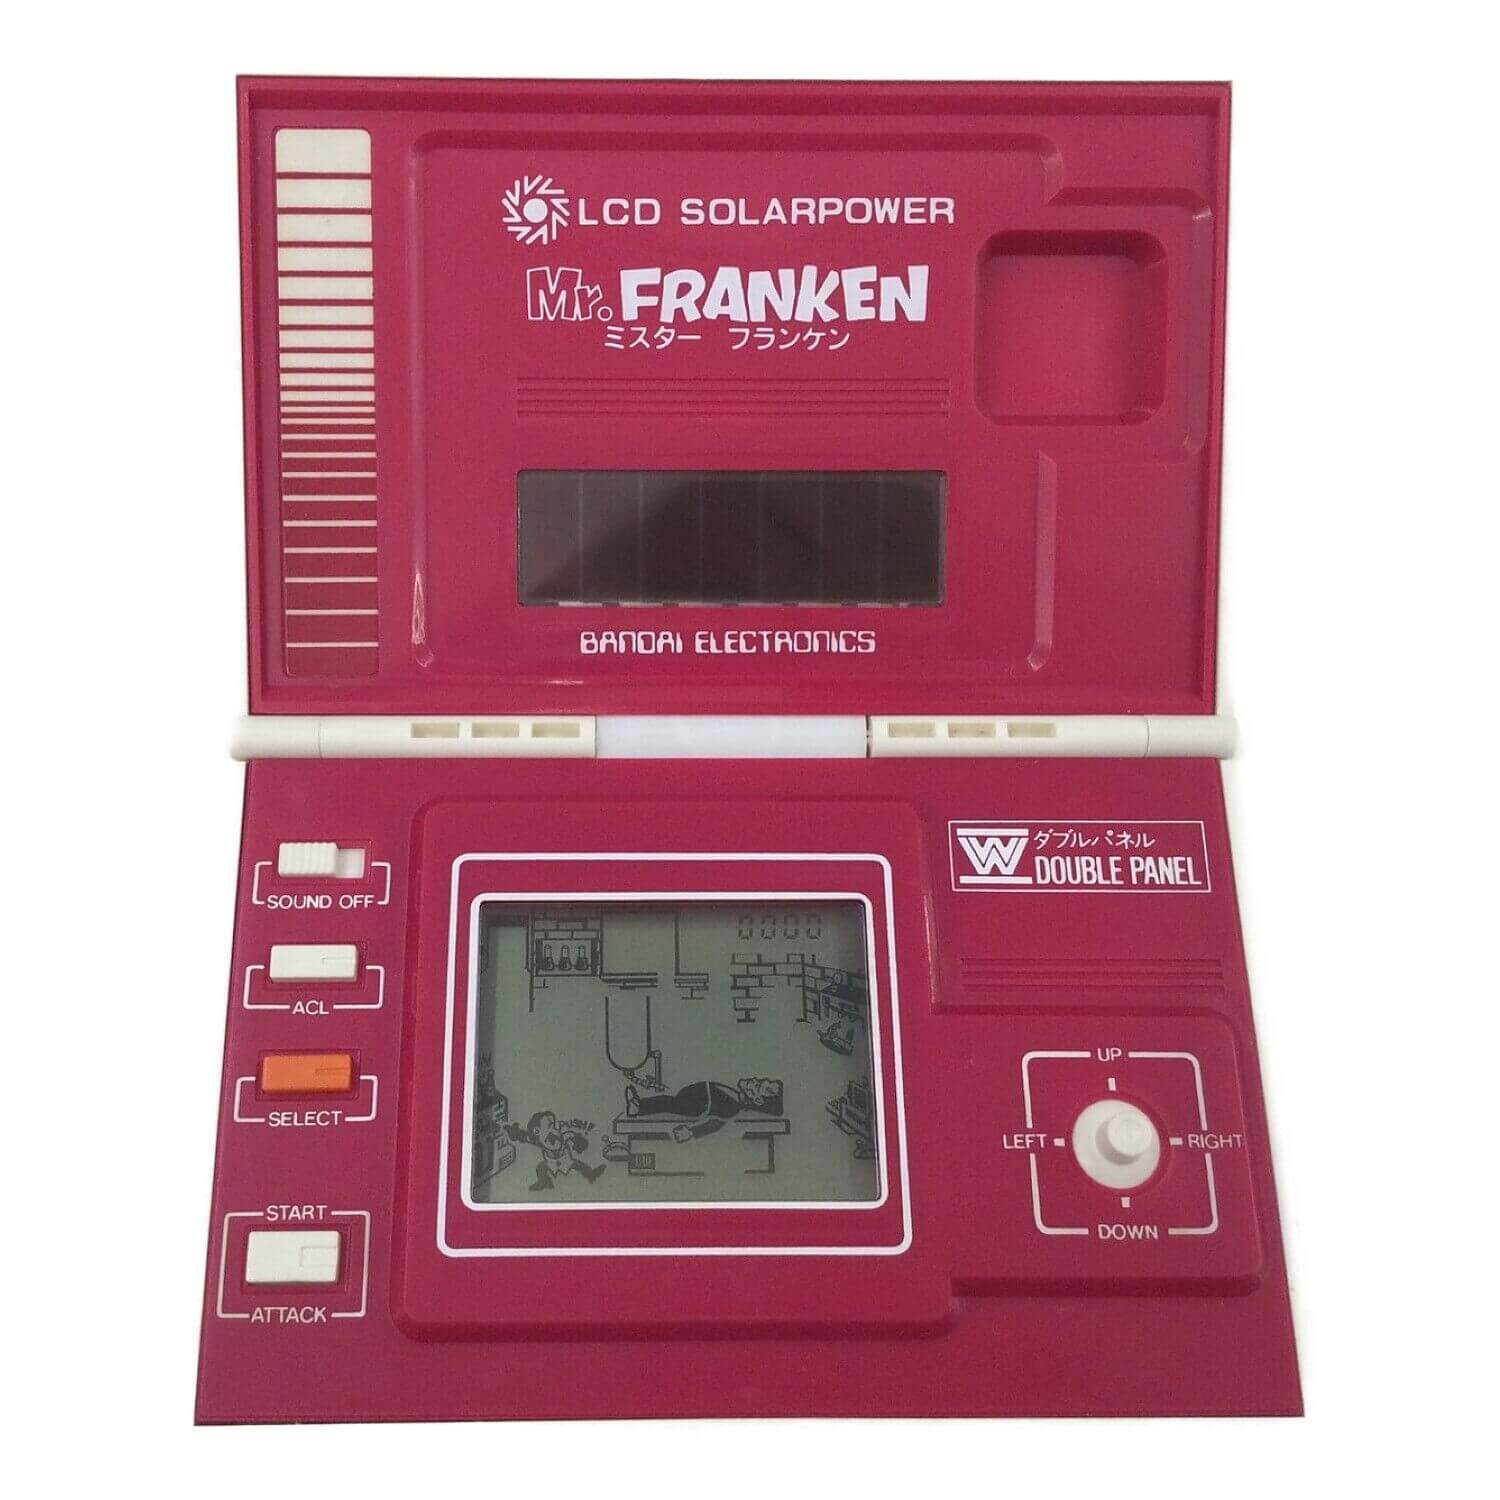 Bandai LCD Solar power Game - (ミスターフランケン Mr. Franken)